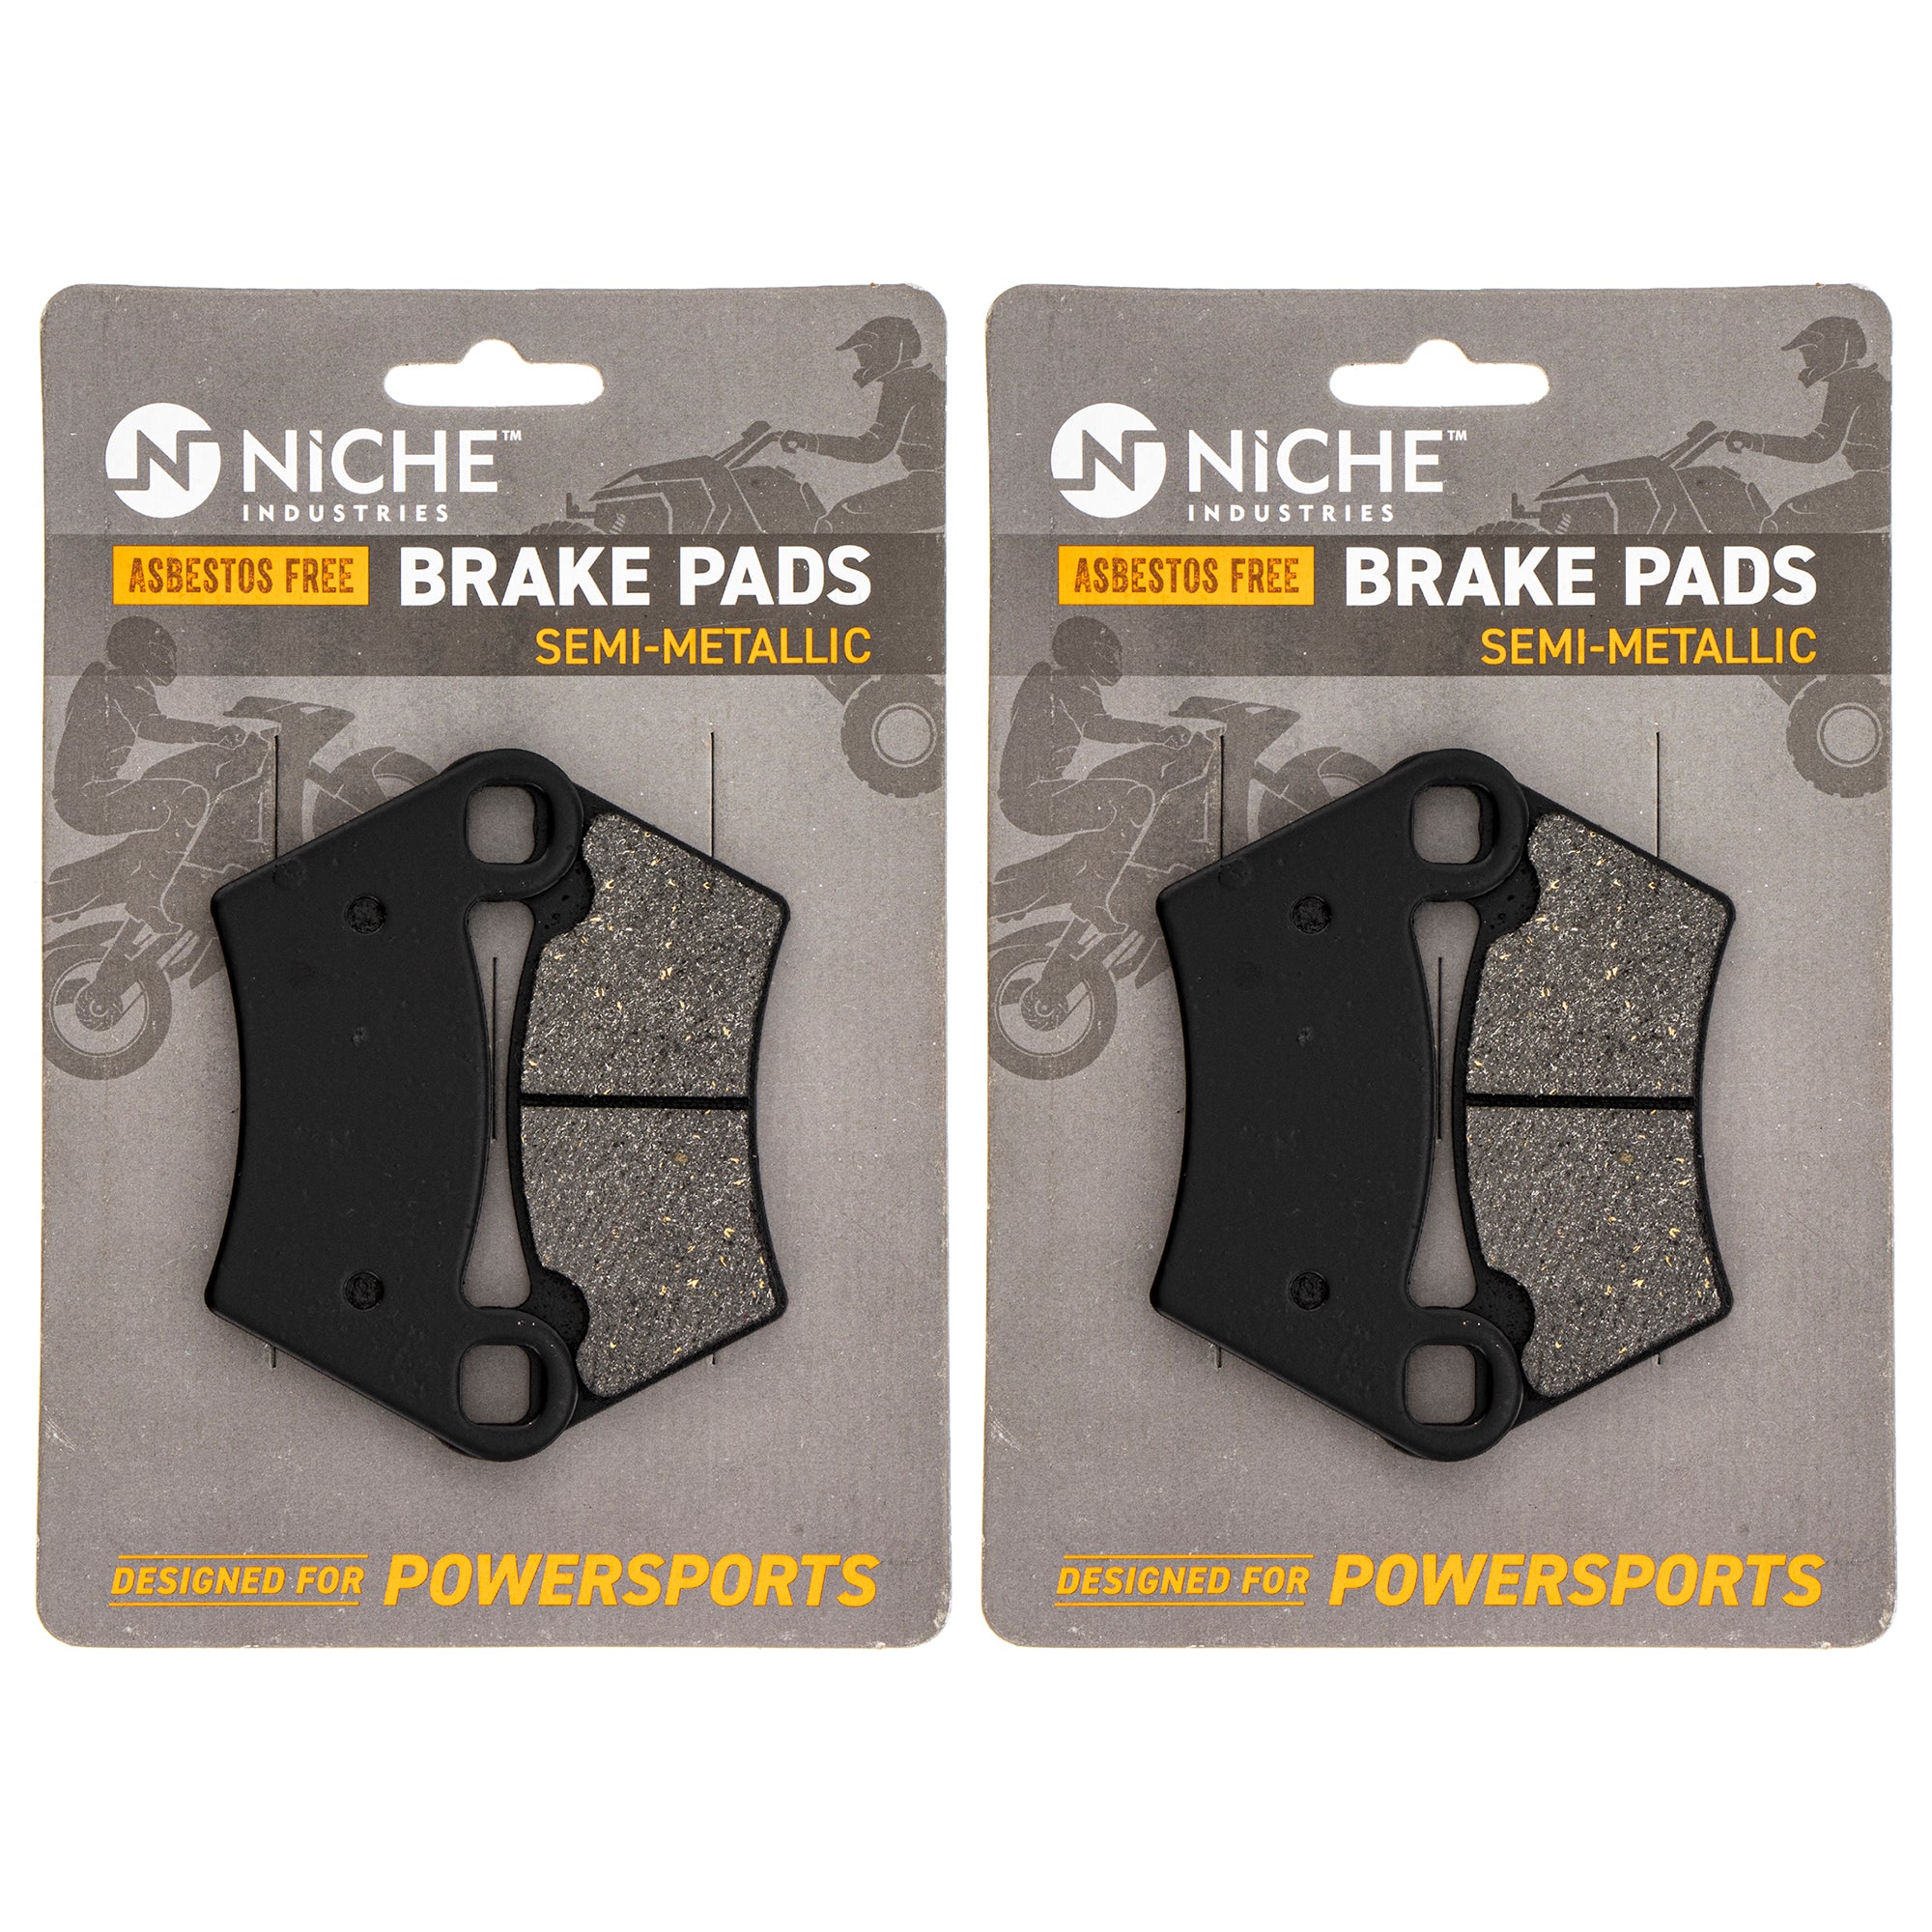 NICHE MK1001315 Brake Pad Set for Polaris GEM ACE 2202413 2206025